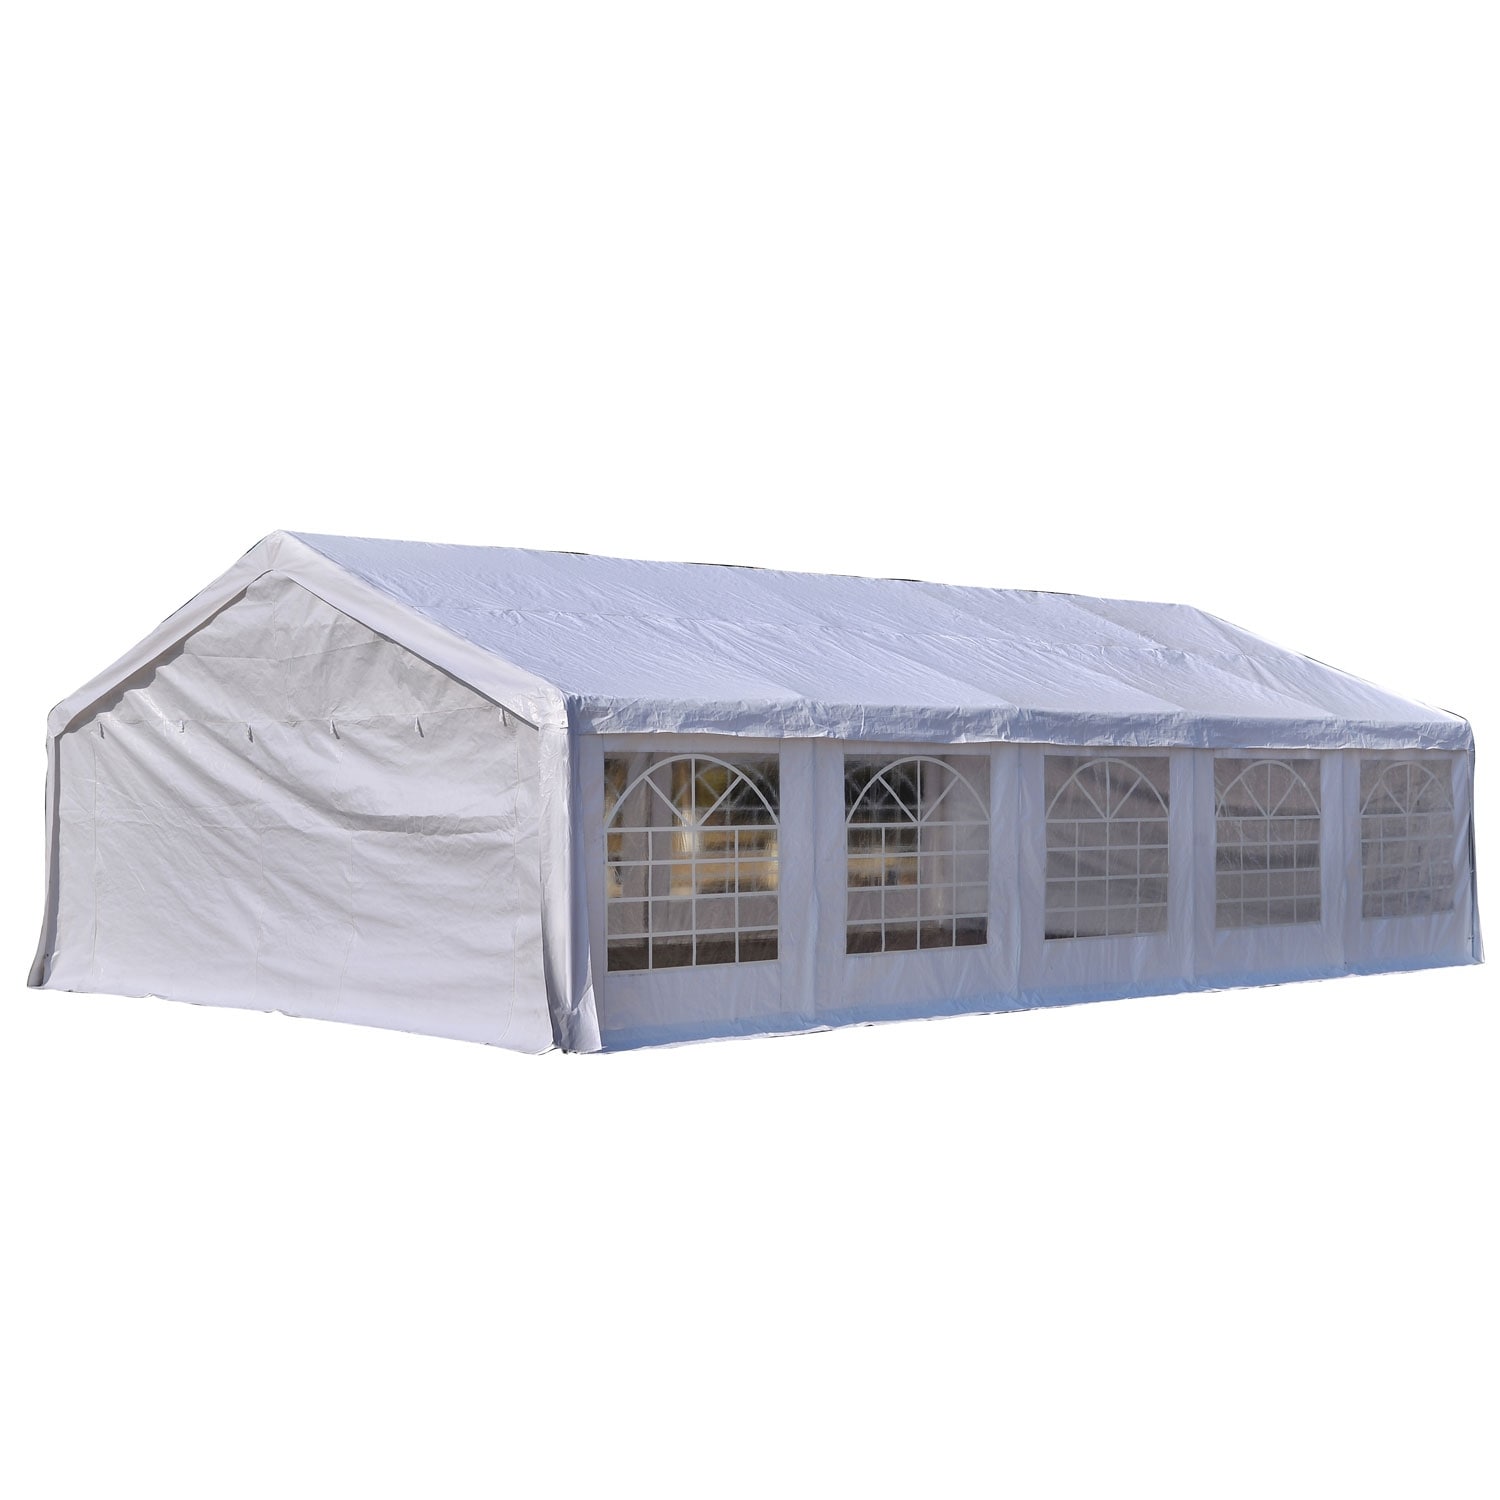 32x 20 Outsunny Carport Wedding Tent